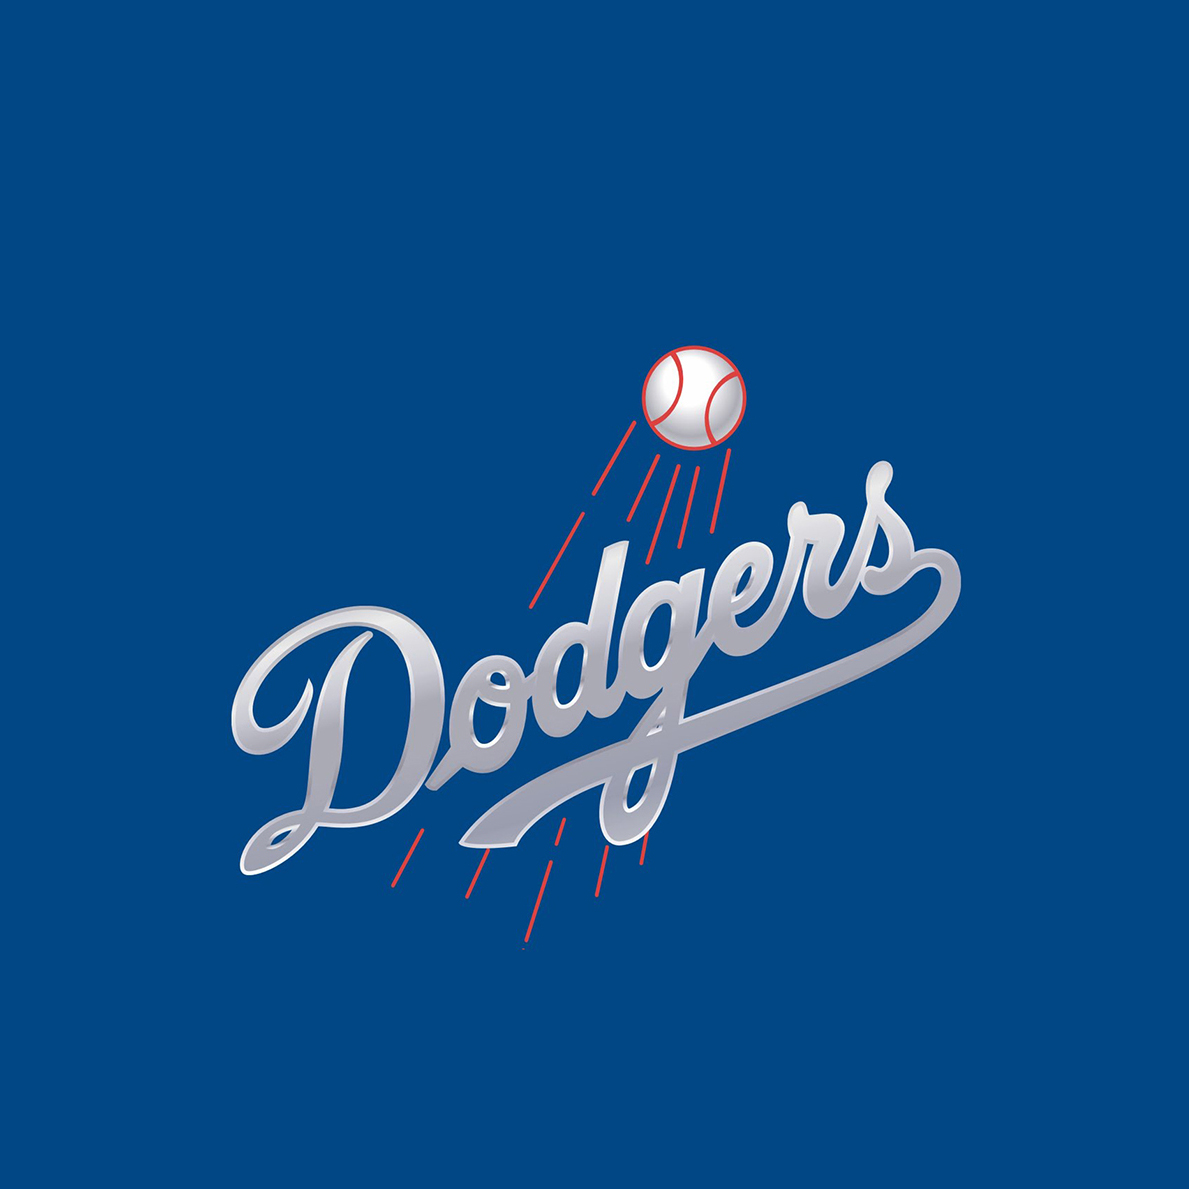 LA Dodgers Baseball Franchise